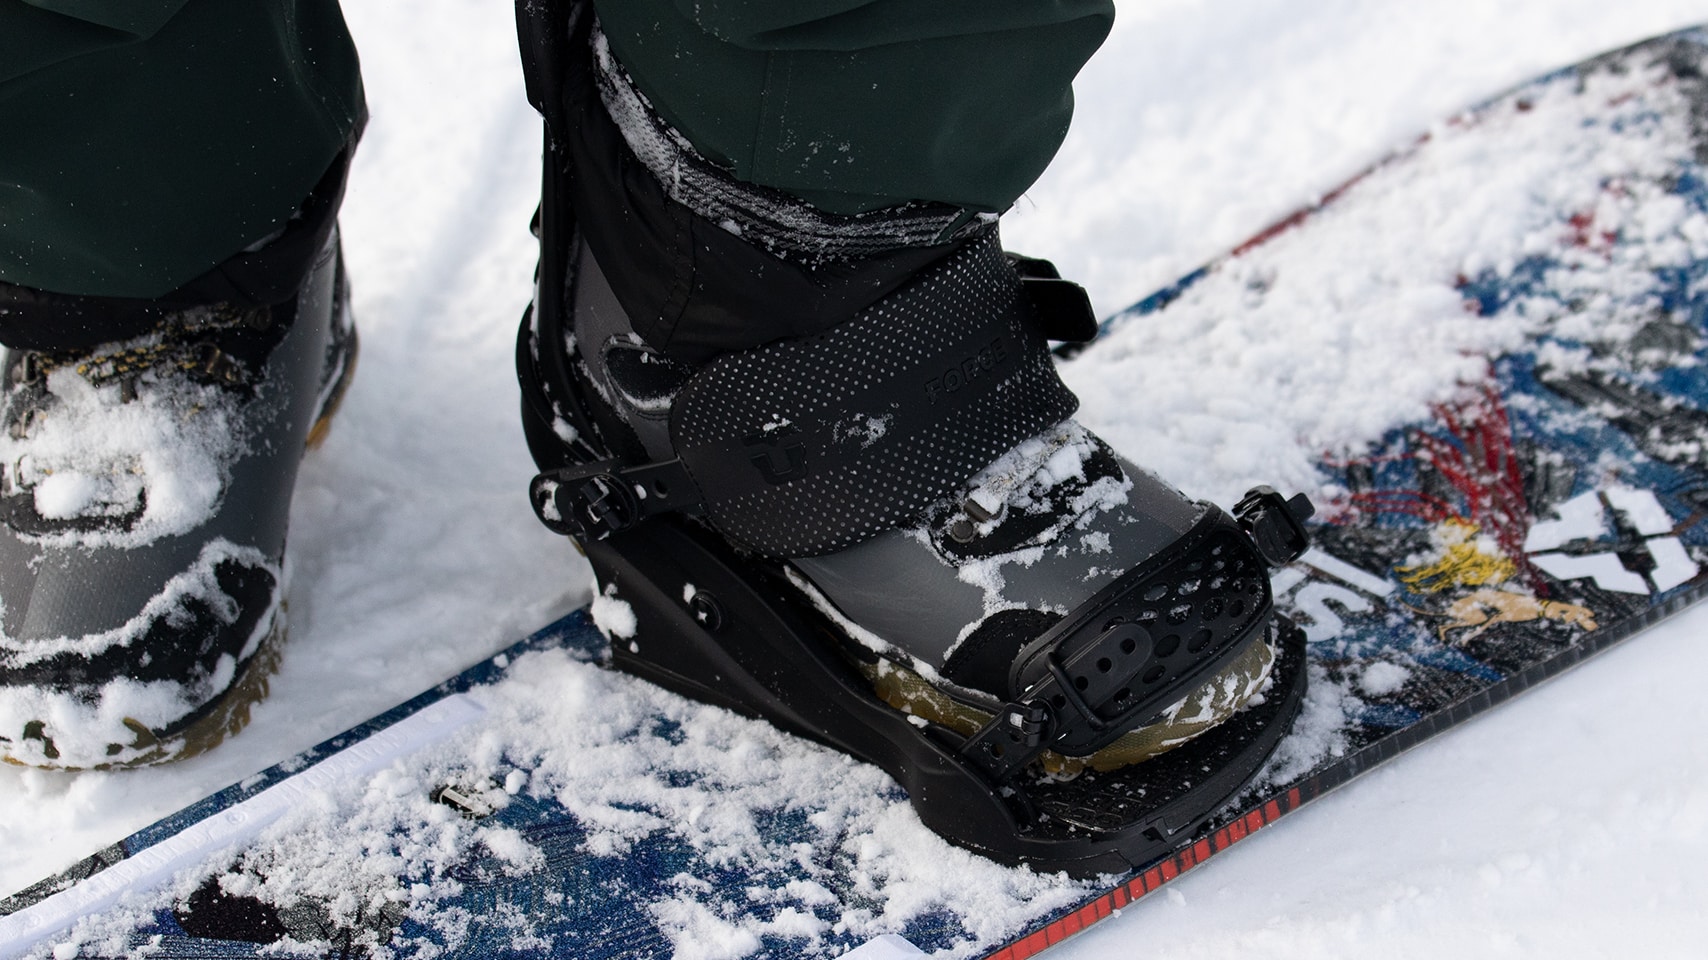 ski boot fitting toe caps